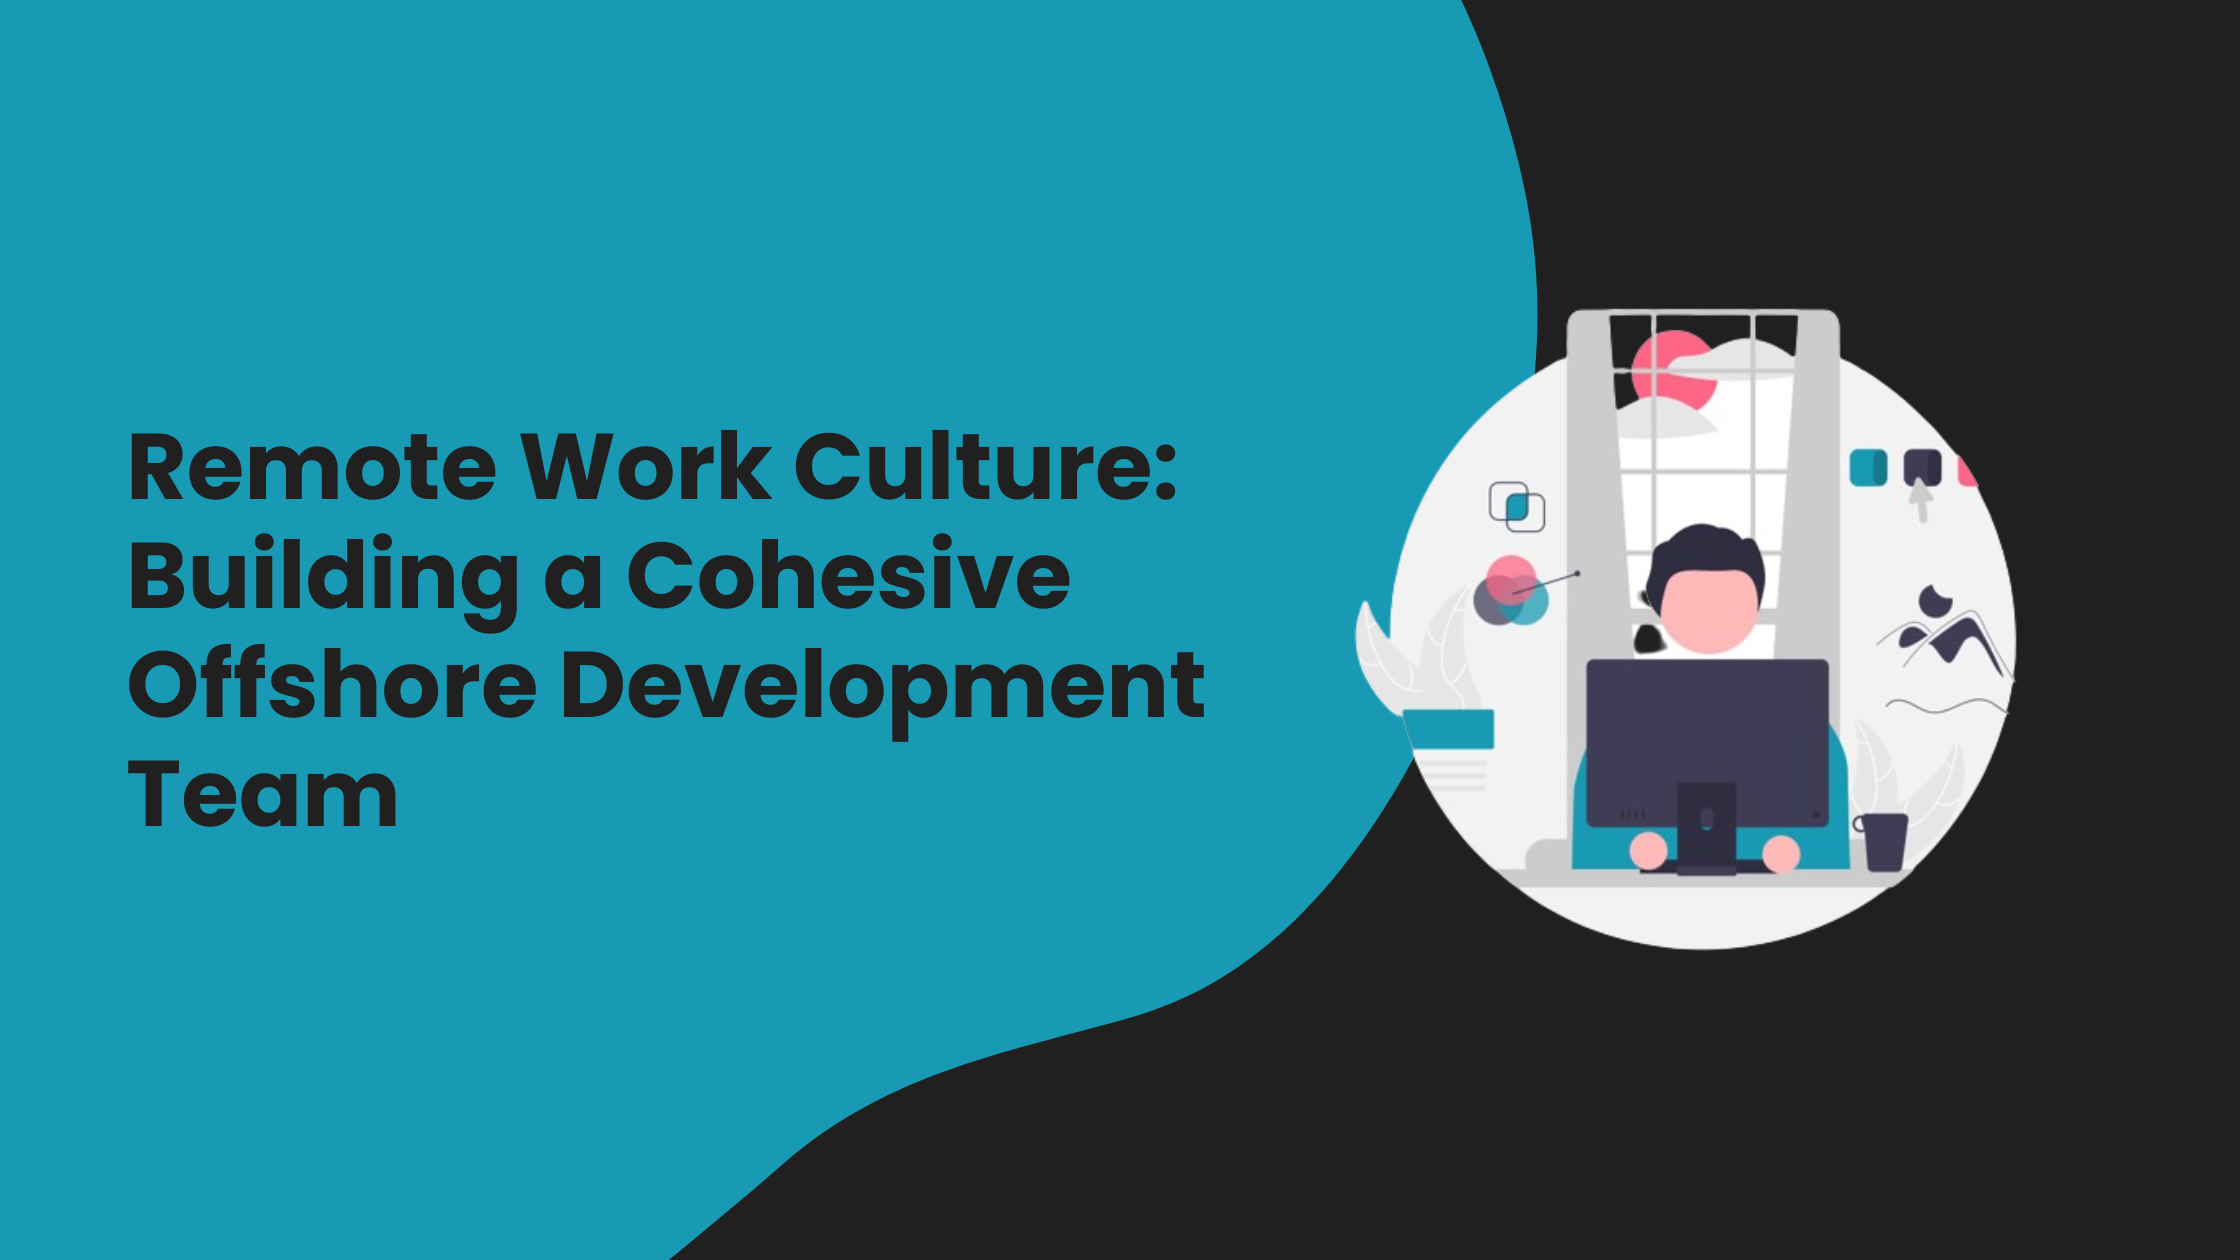 Remote Work Culture: Building a Cohesive Offshore Development Team